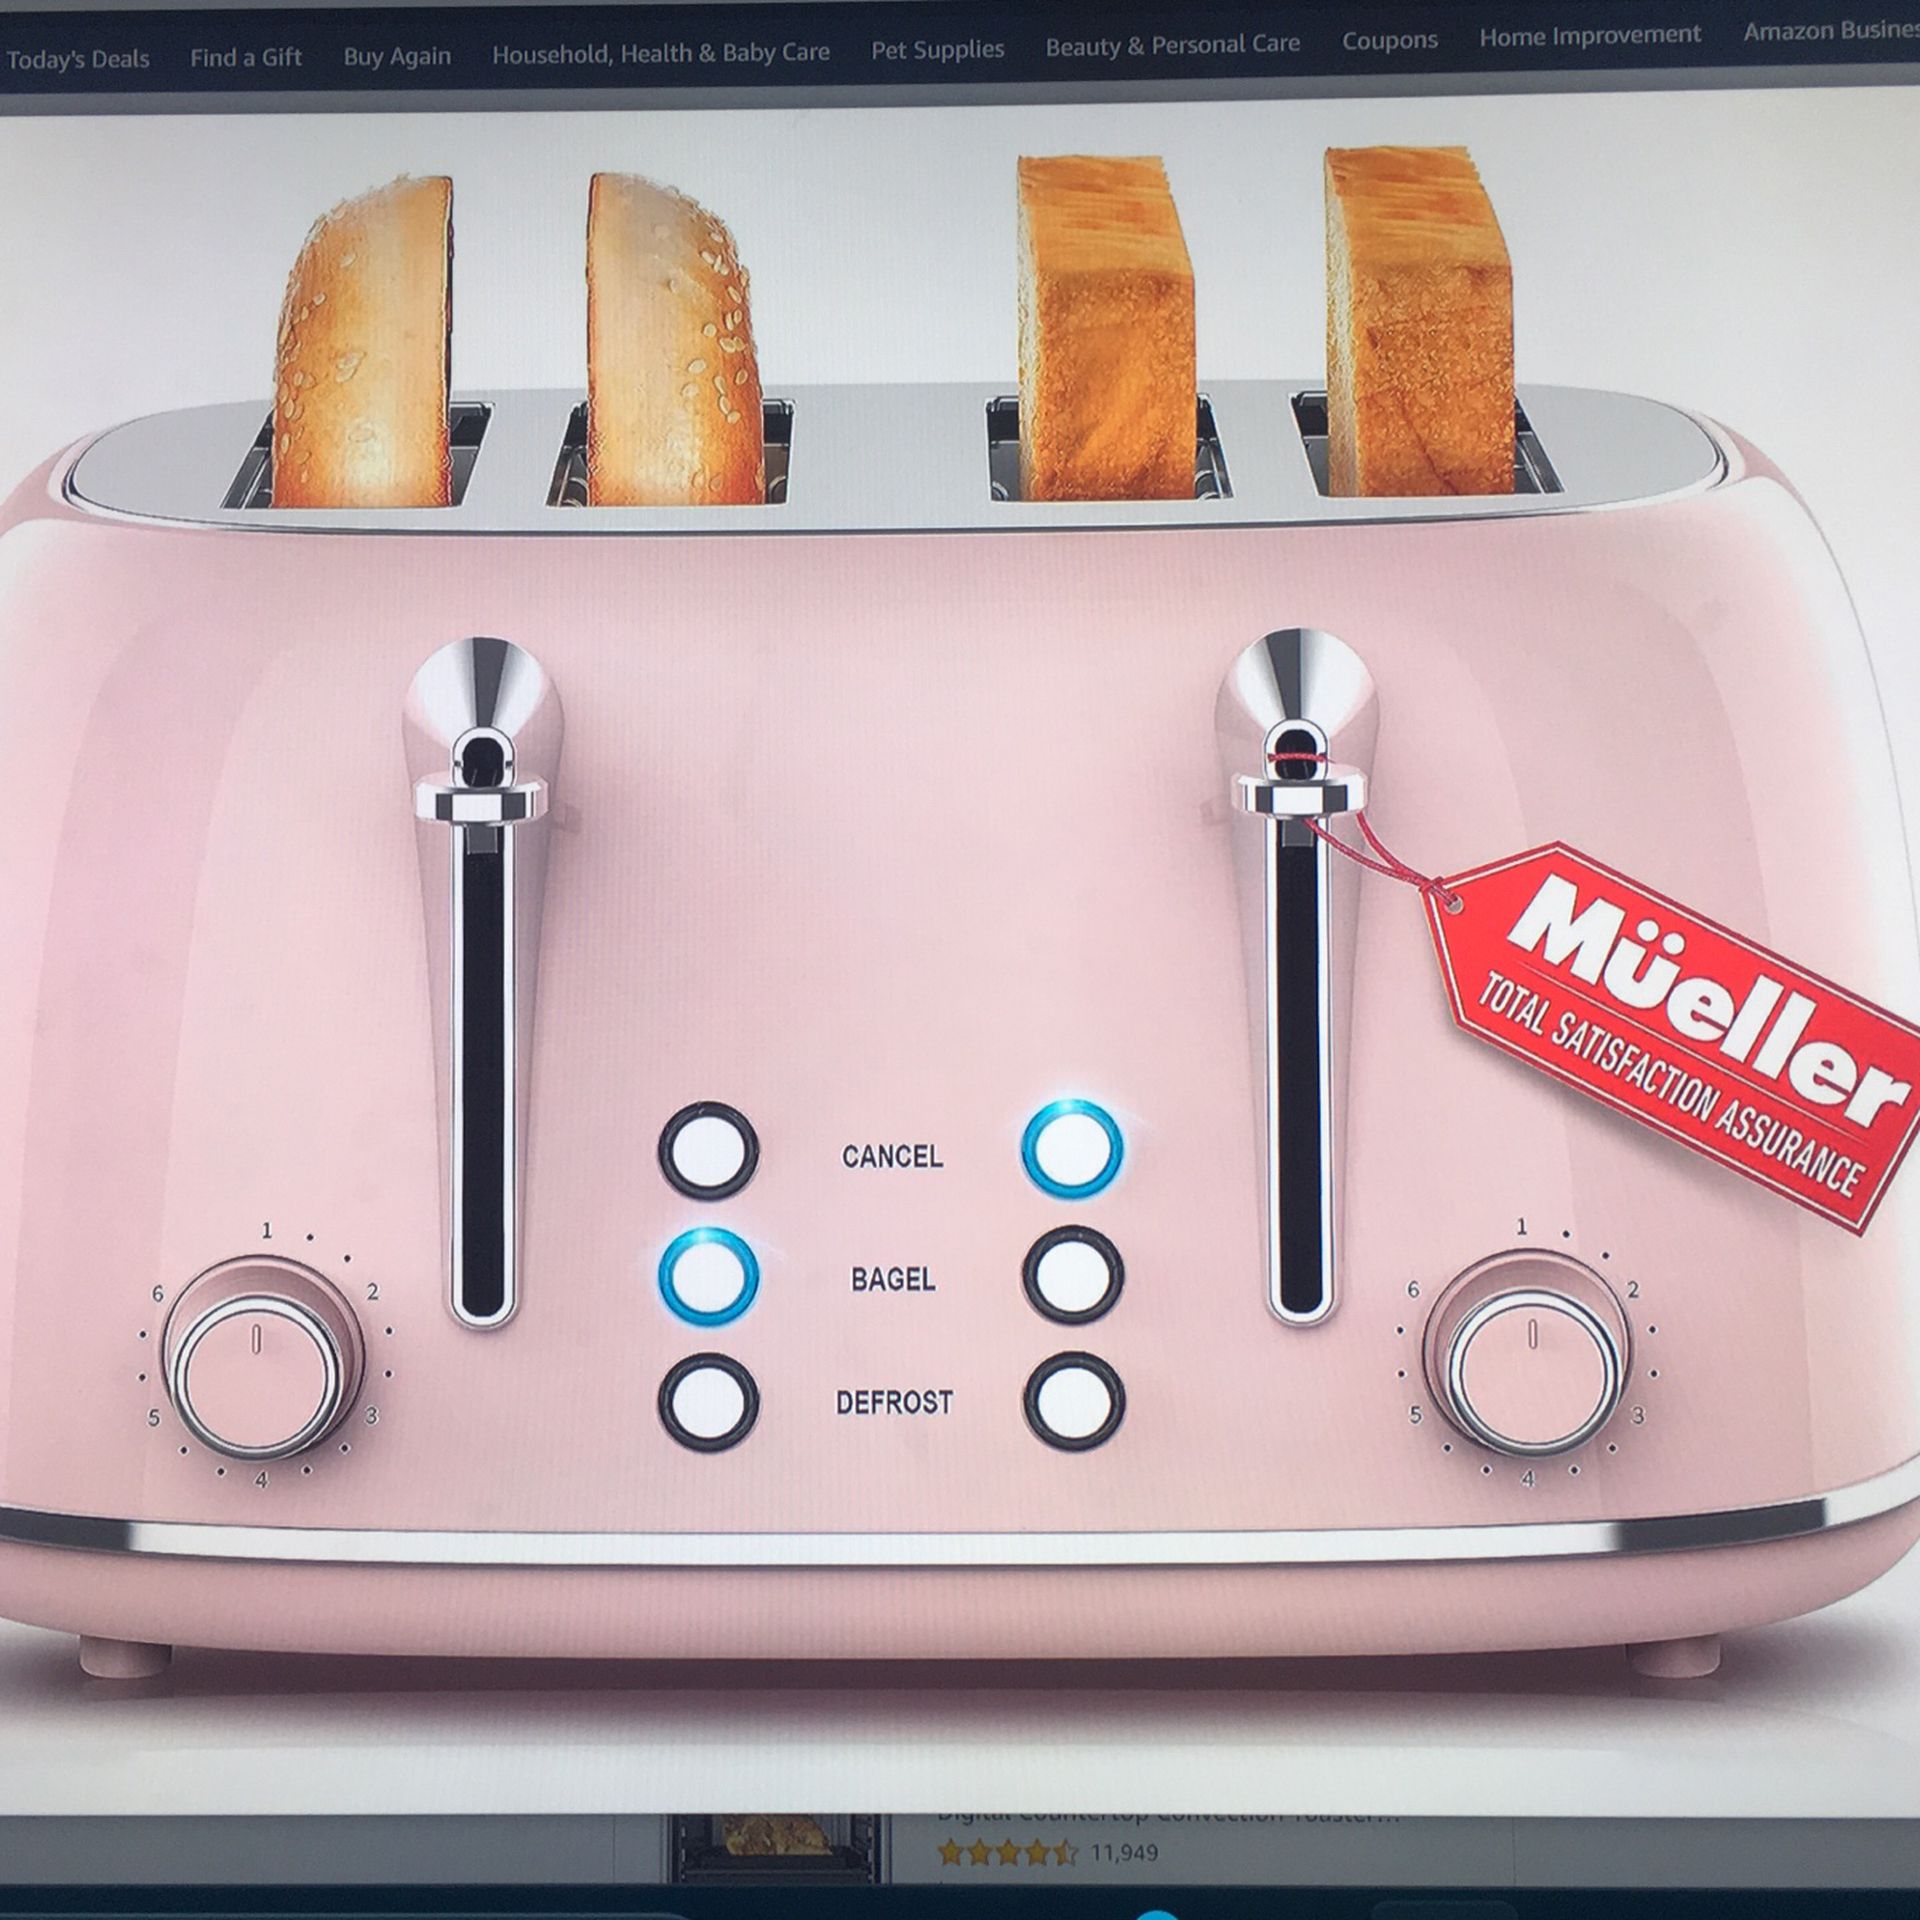 Mueller Retro Toaster 2 Slice